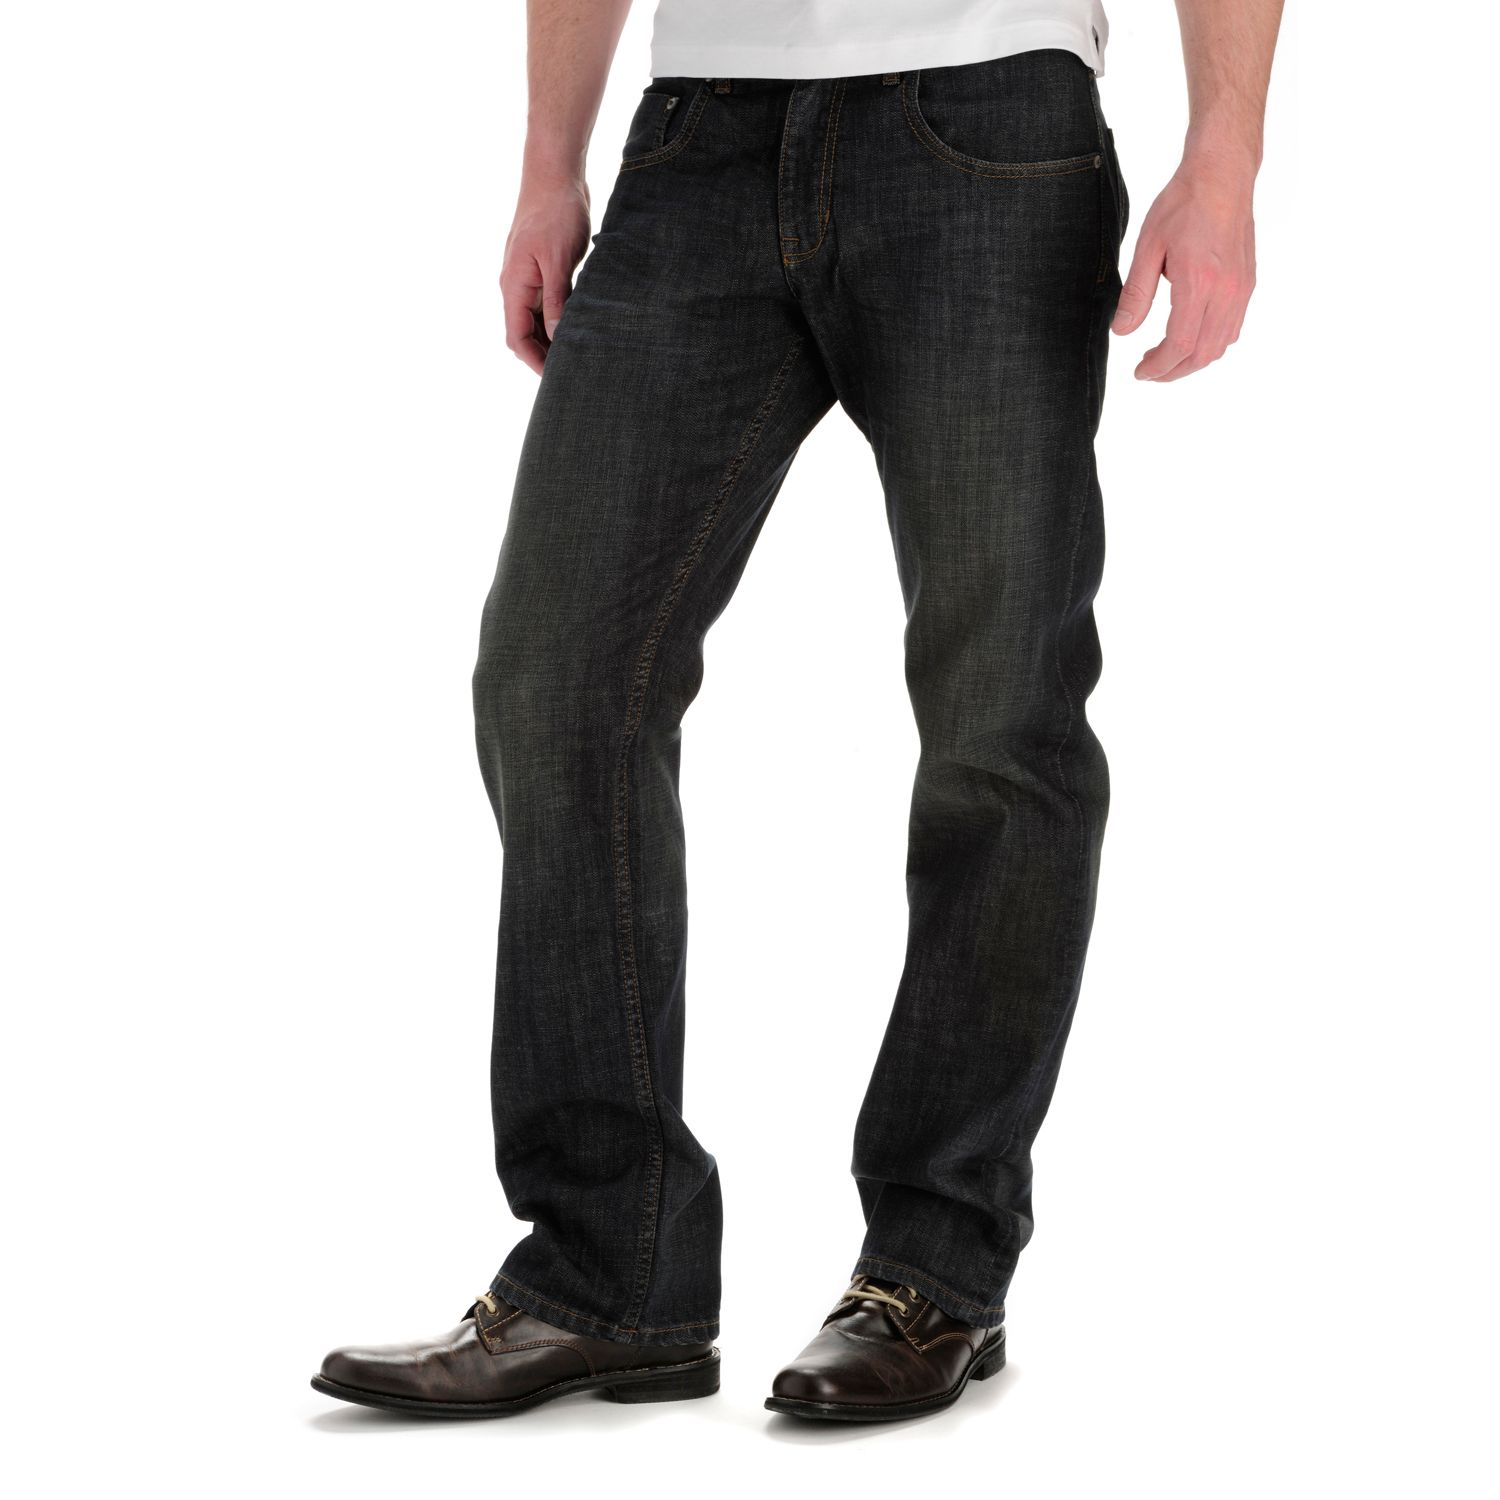 lee jeans modern series l342